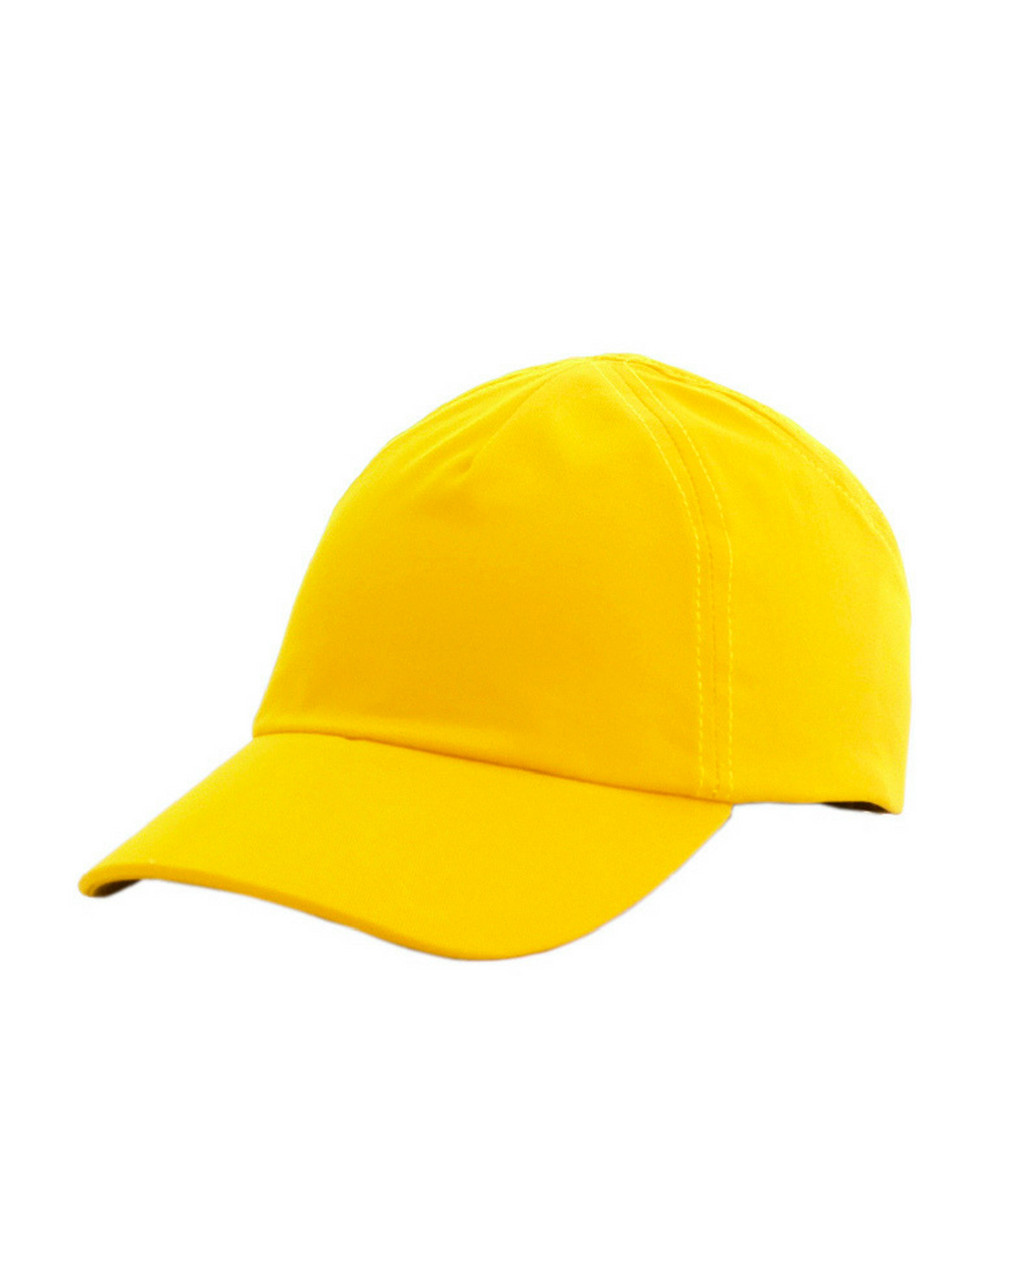 Каскетка РОСОМЗ RZ FavoriT CAP жёлтая, 95515 (х10) (РАСПРОДАЖА)